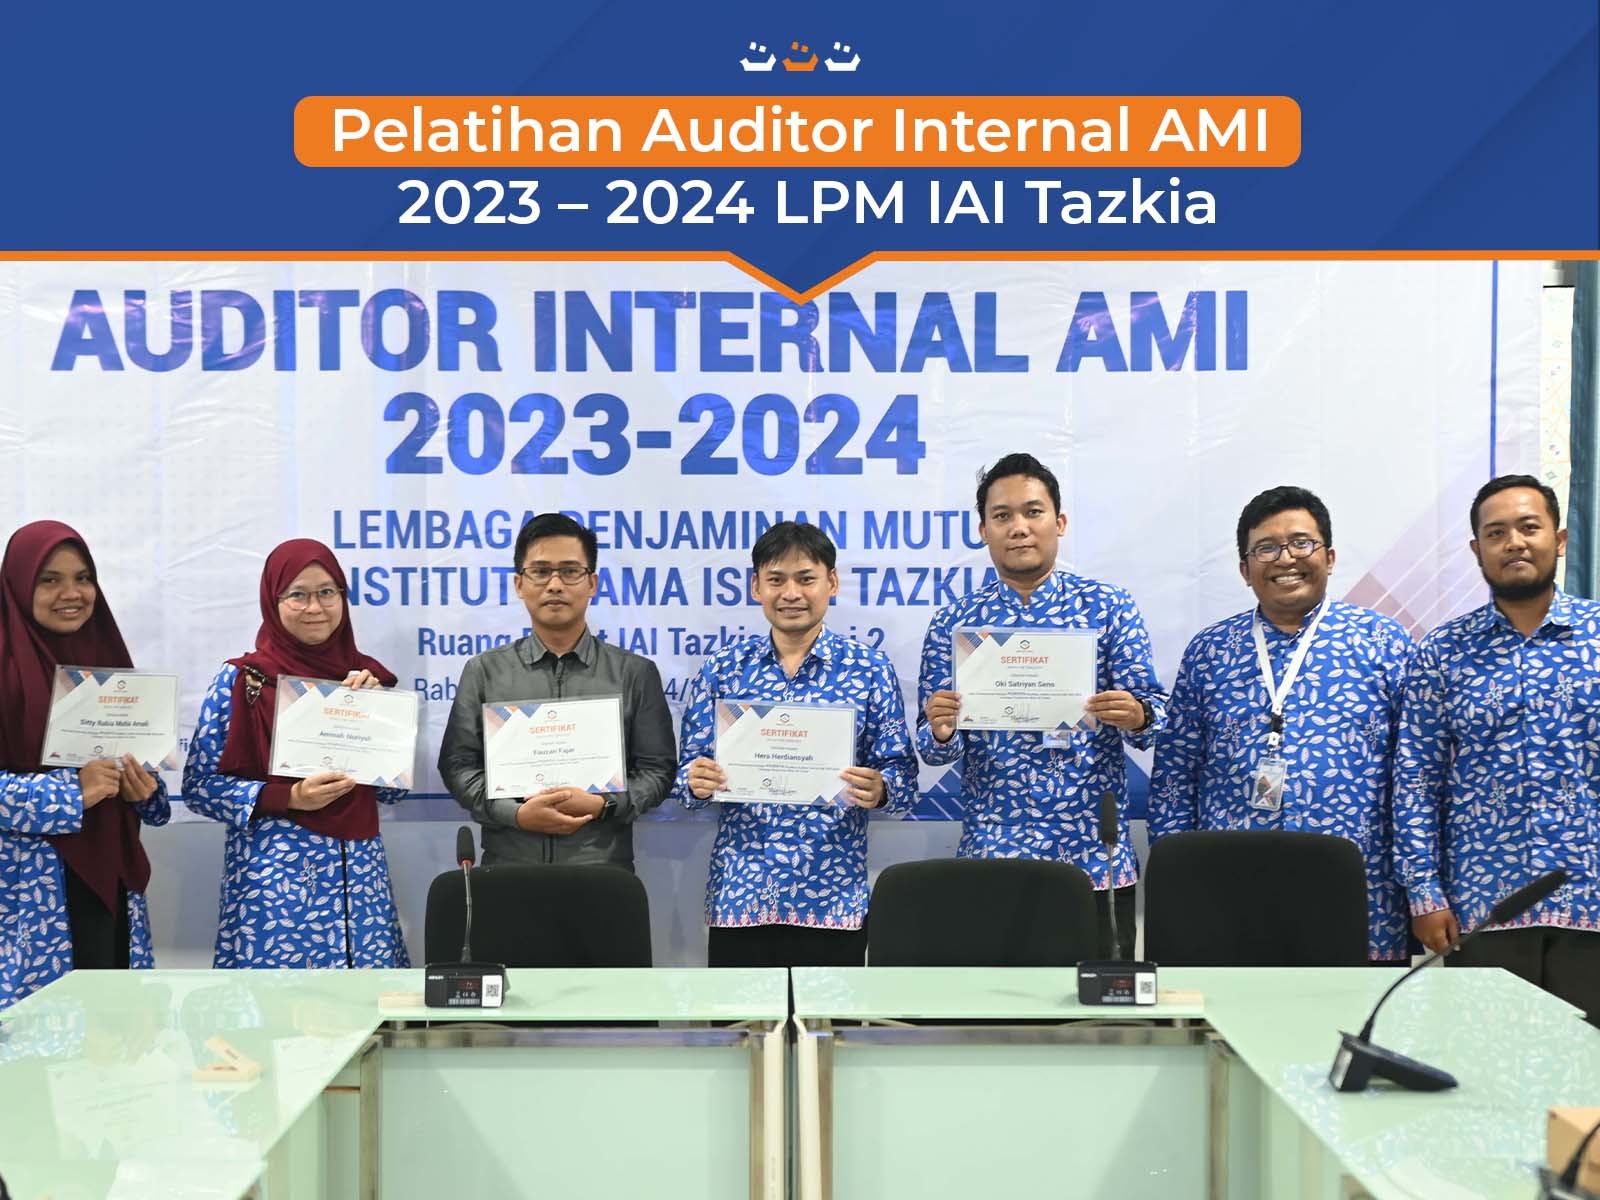 Pelatihan Auditor Internal AMI 2023 – 2024 LPM IAI Tazkia